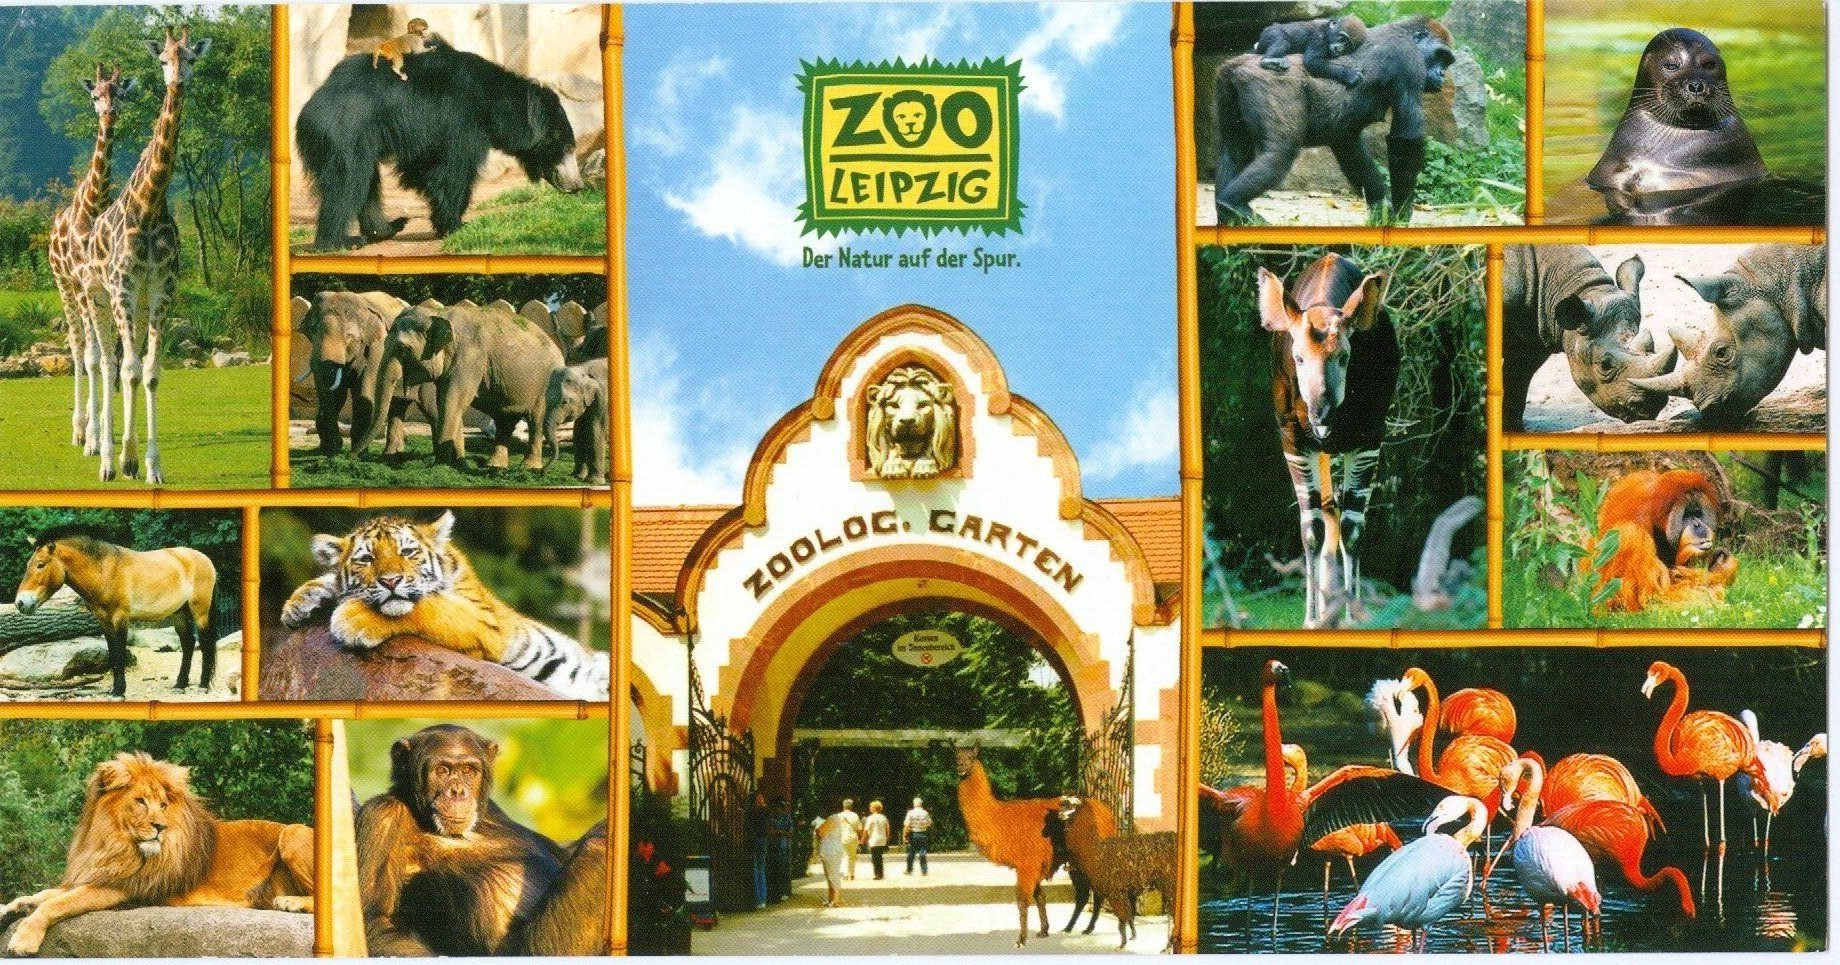 Ansichtskarte Zoo Leipzig (SMILE & FUN Verlag und Ideenbörse E.K. CC BY-NC-SA)